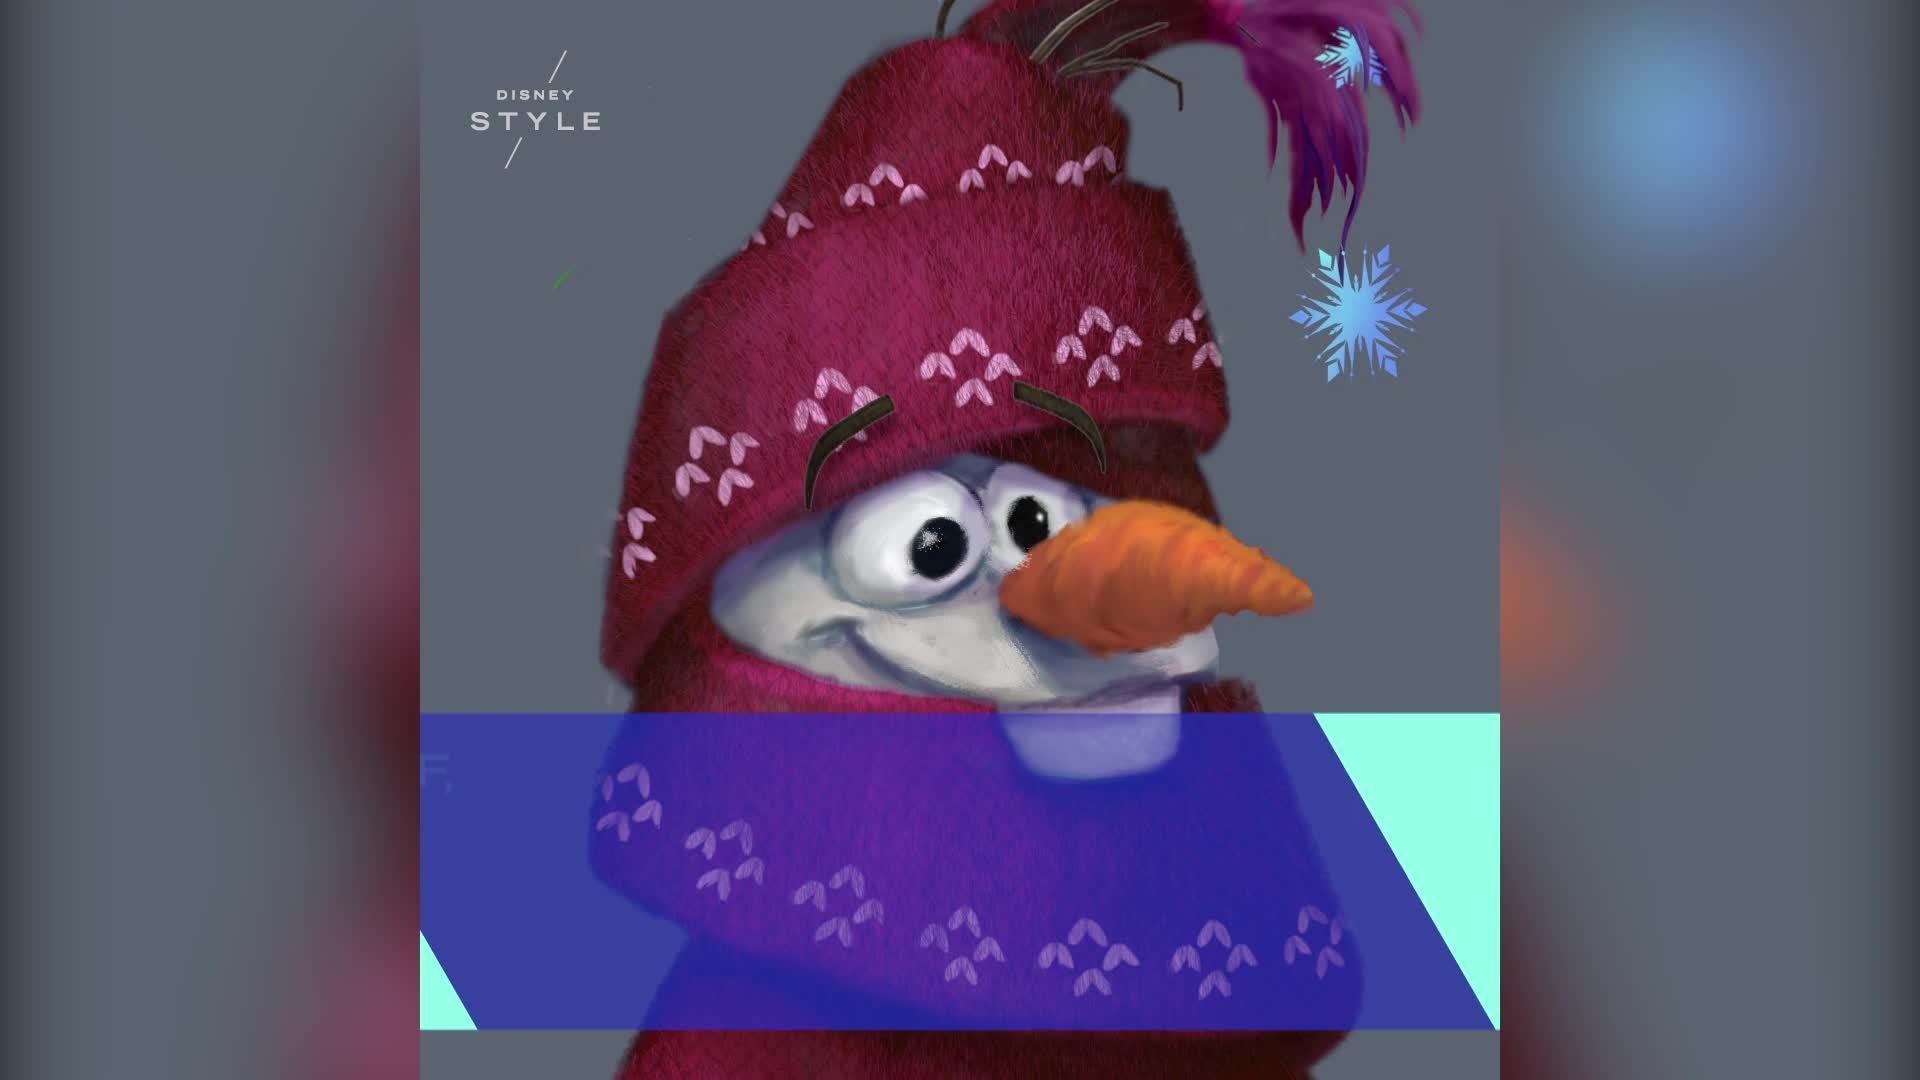 Costume Details of "Olaf's Frozen Adventure"